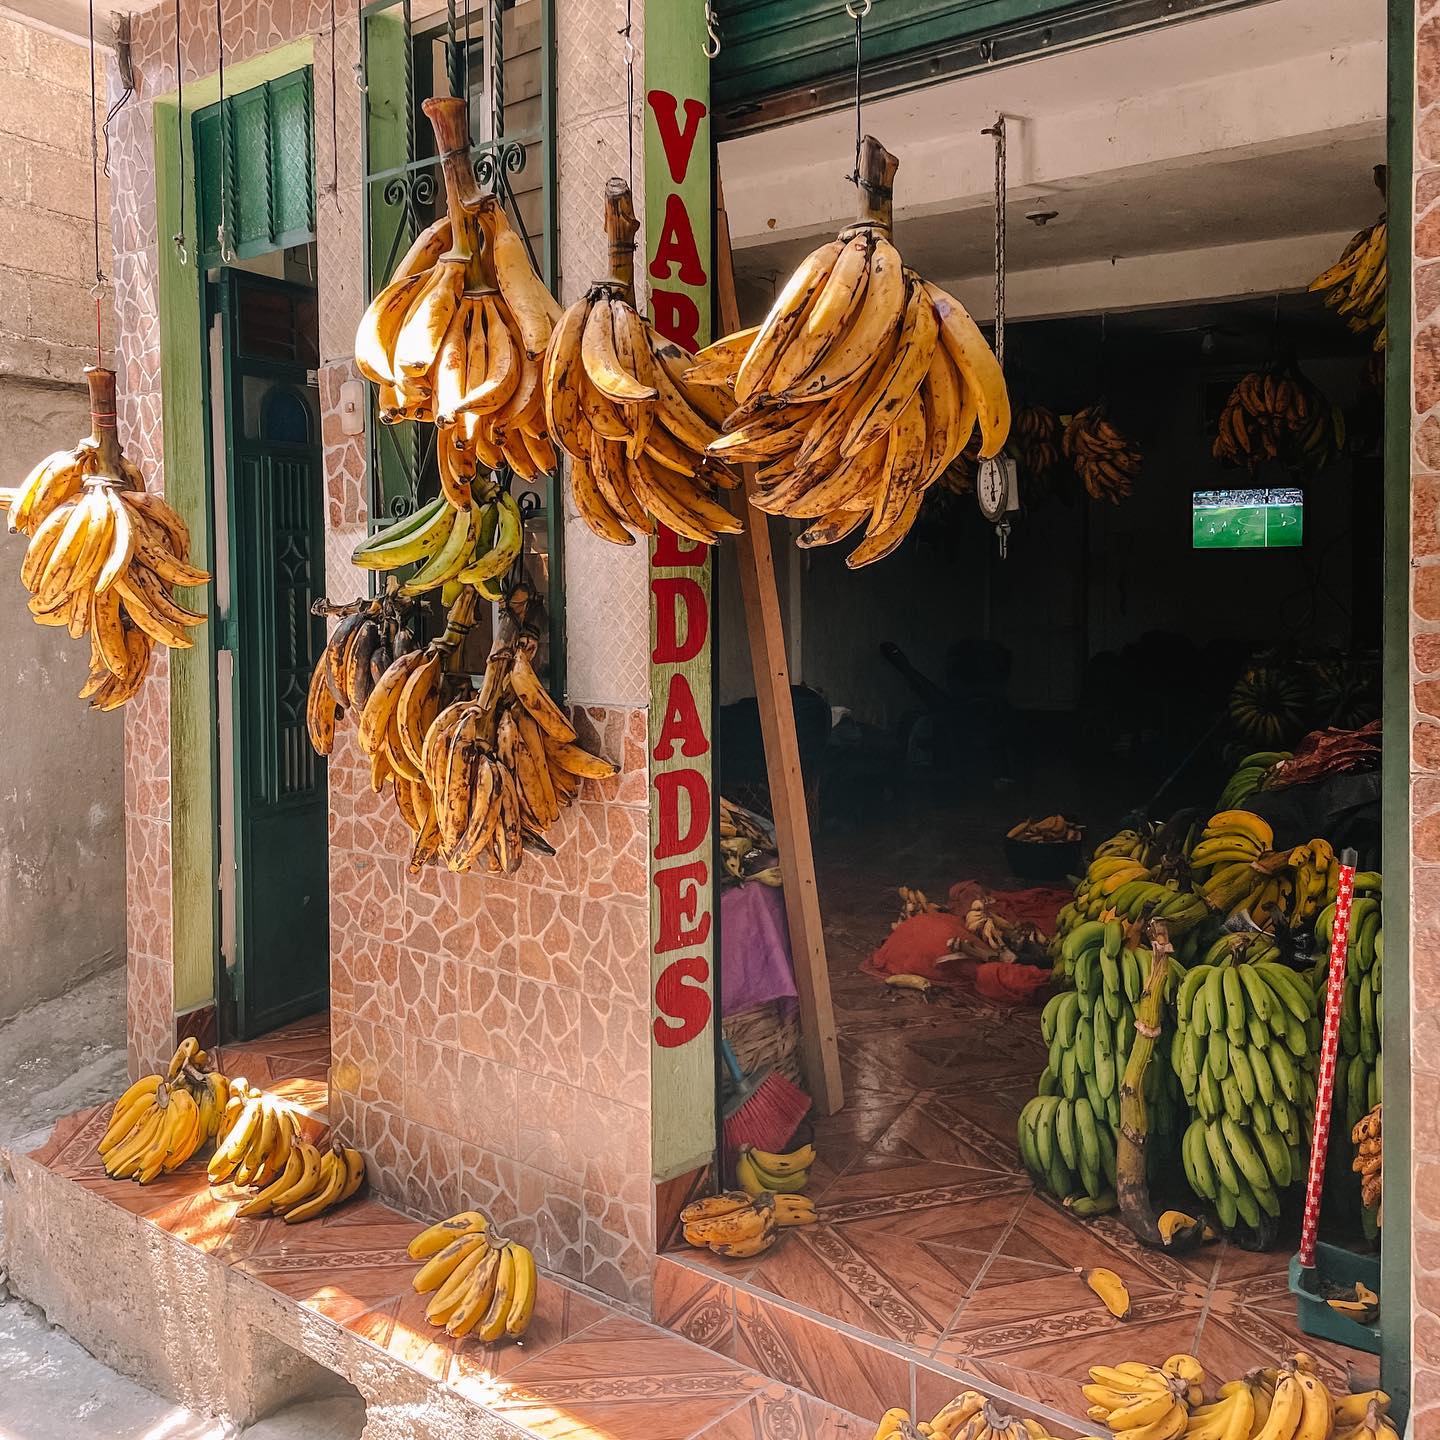 2 of the most important things in life; Bananas and football 🤪

#guatephoto #worldtrip #sanpedrolalaguna #guatelinda #guateimpresionante #viajerosporelmundo #wereldreis #reizen #bananas #lagodeatitlan #atitlanlake #guatemalatravel #viajera #backpackerlife #rumagtravel #lonelyplanetnl #explorandoguatemala #foodpics #tiendaguate #backpacktraveller #lagoatitlan #sanpedrolaguna #locallife #travelguatemala #guatemalan #reiswijven #reiselust #reisfoto #travelphoto